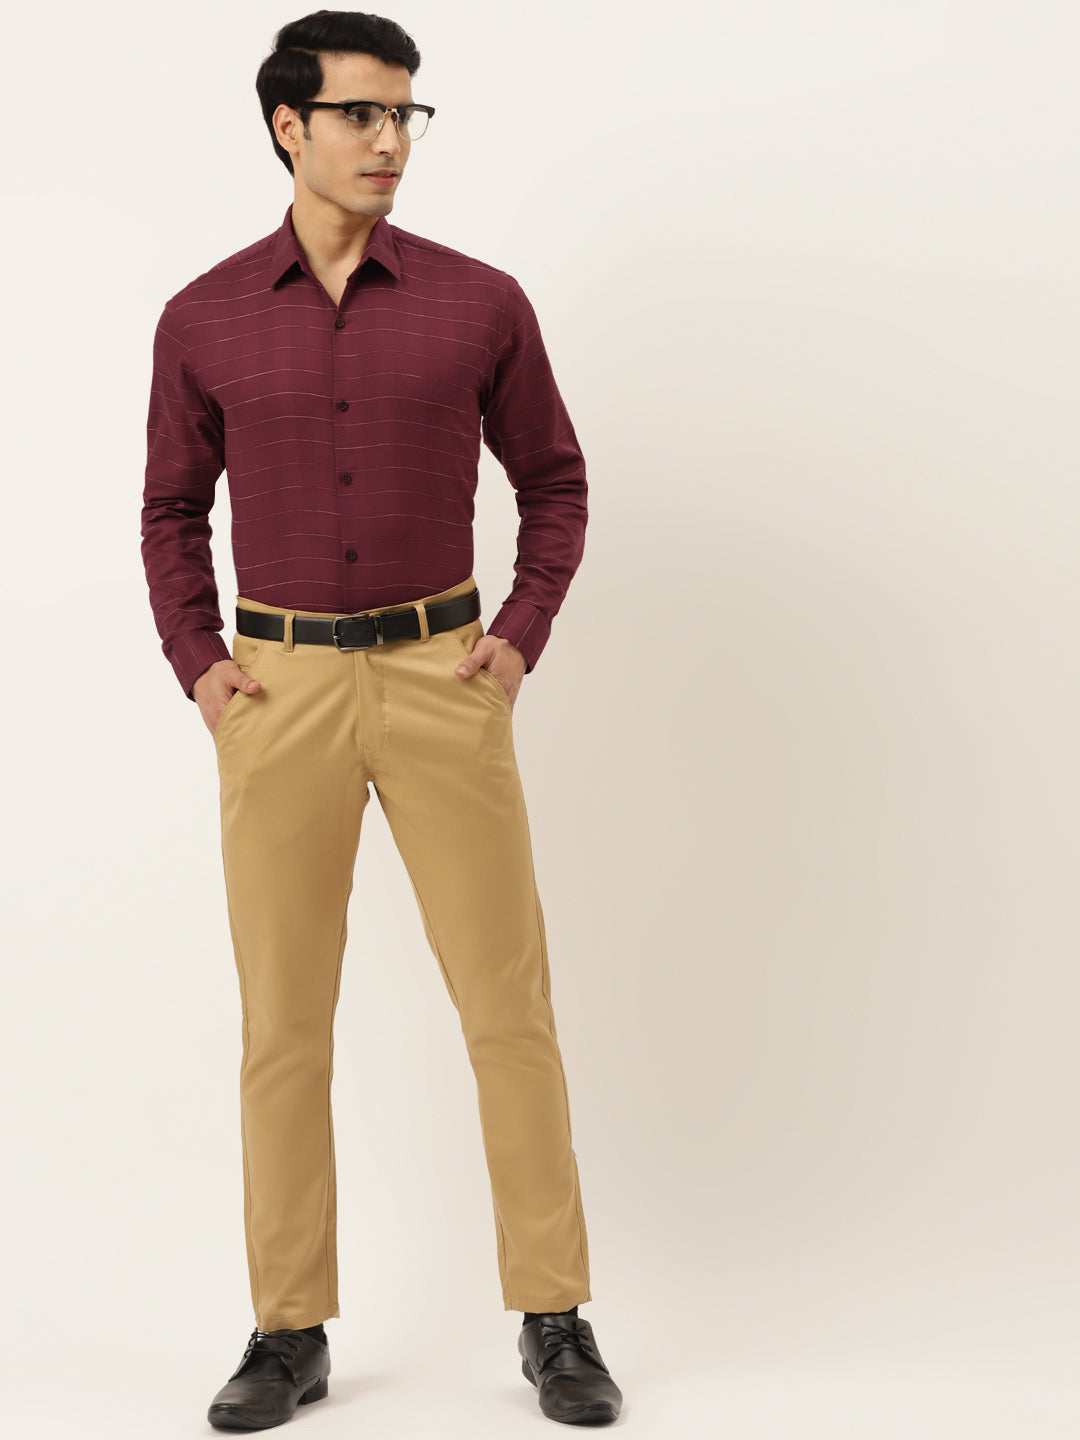 Men's Formal Cotton Horizontal Striped Shirt ( SF 790Maroon ) - Jainish